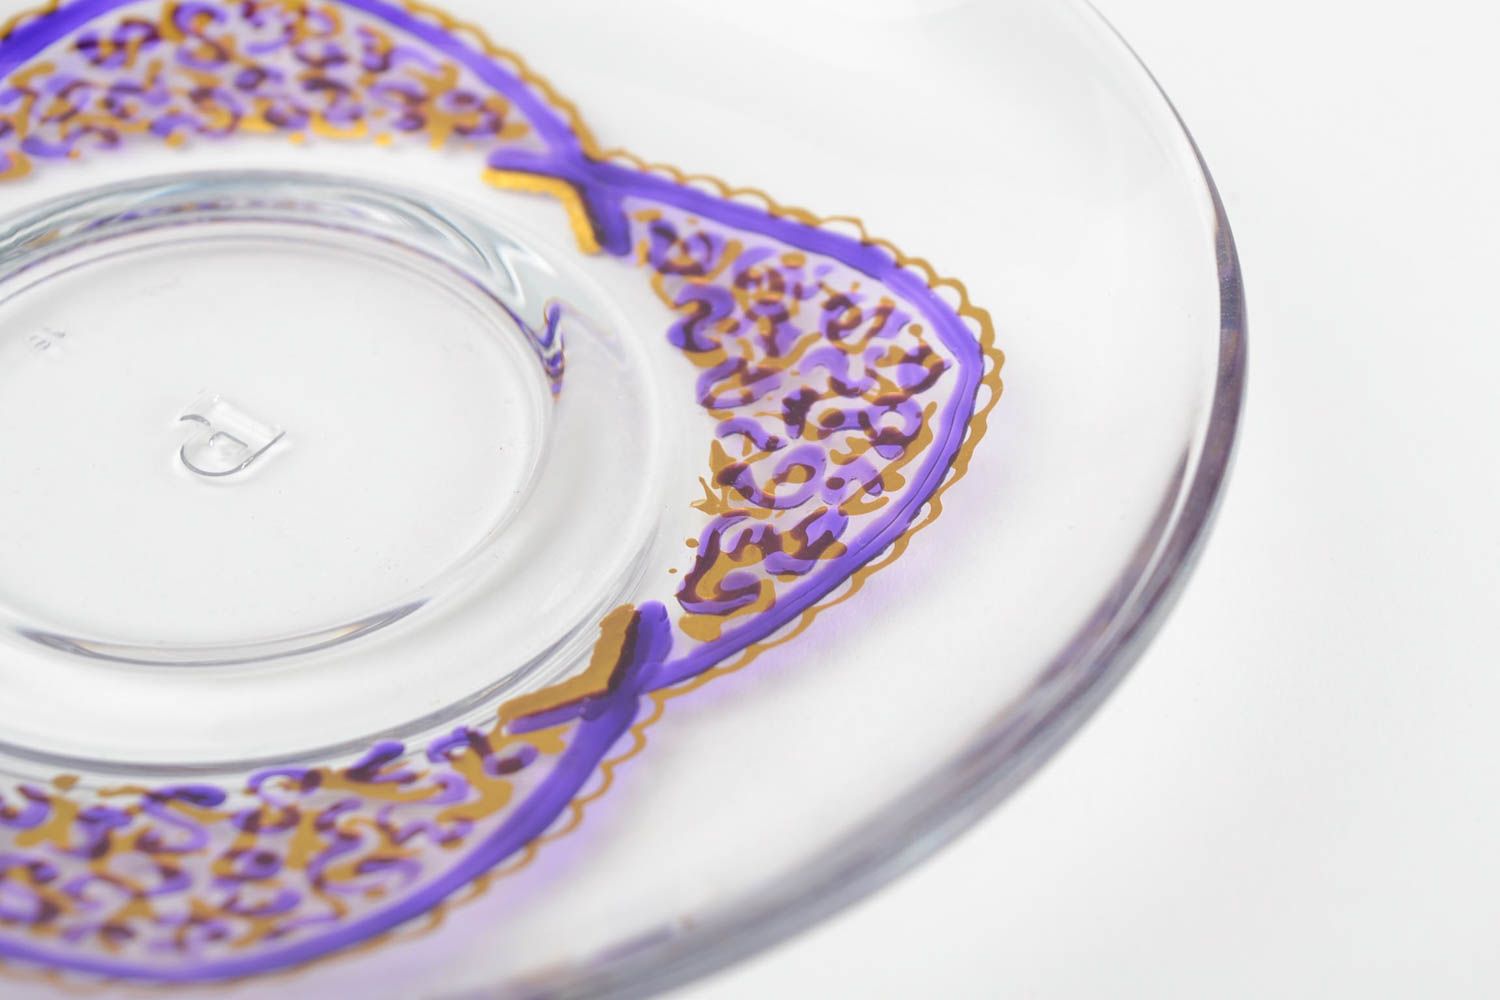 Handmade saucer stained glass saucer glass tableware interior decor ideas photo 5